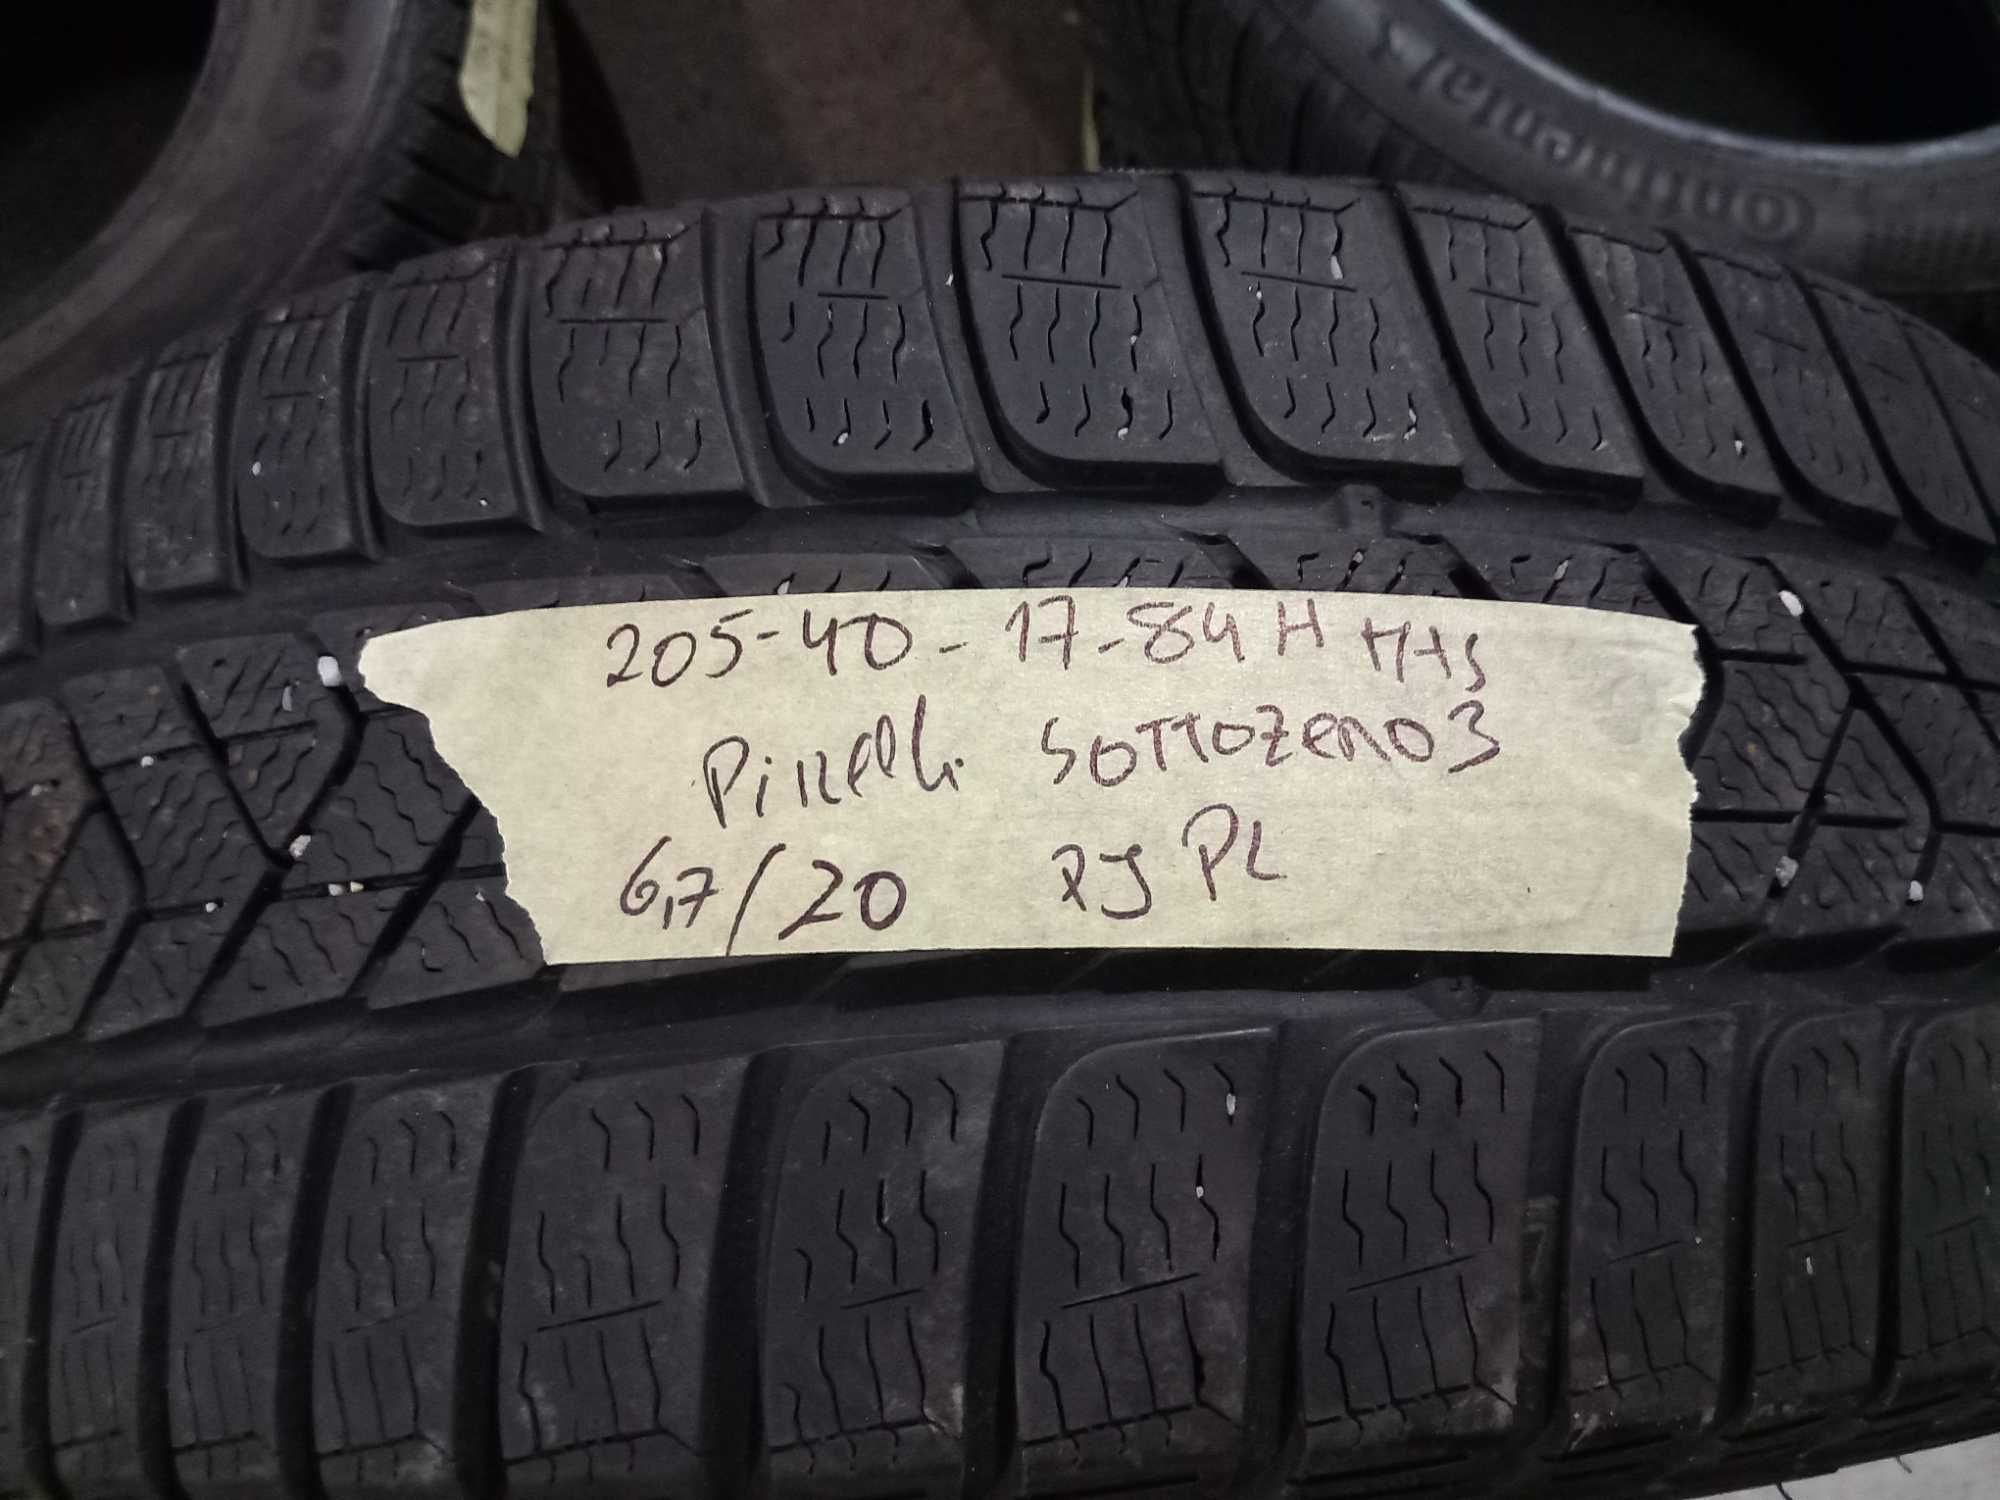 2 Pneus 205/40R17 Pirelli seminovos